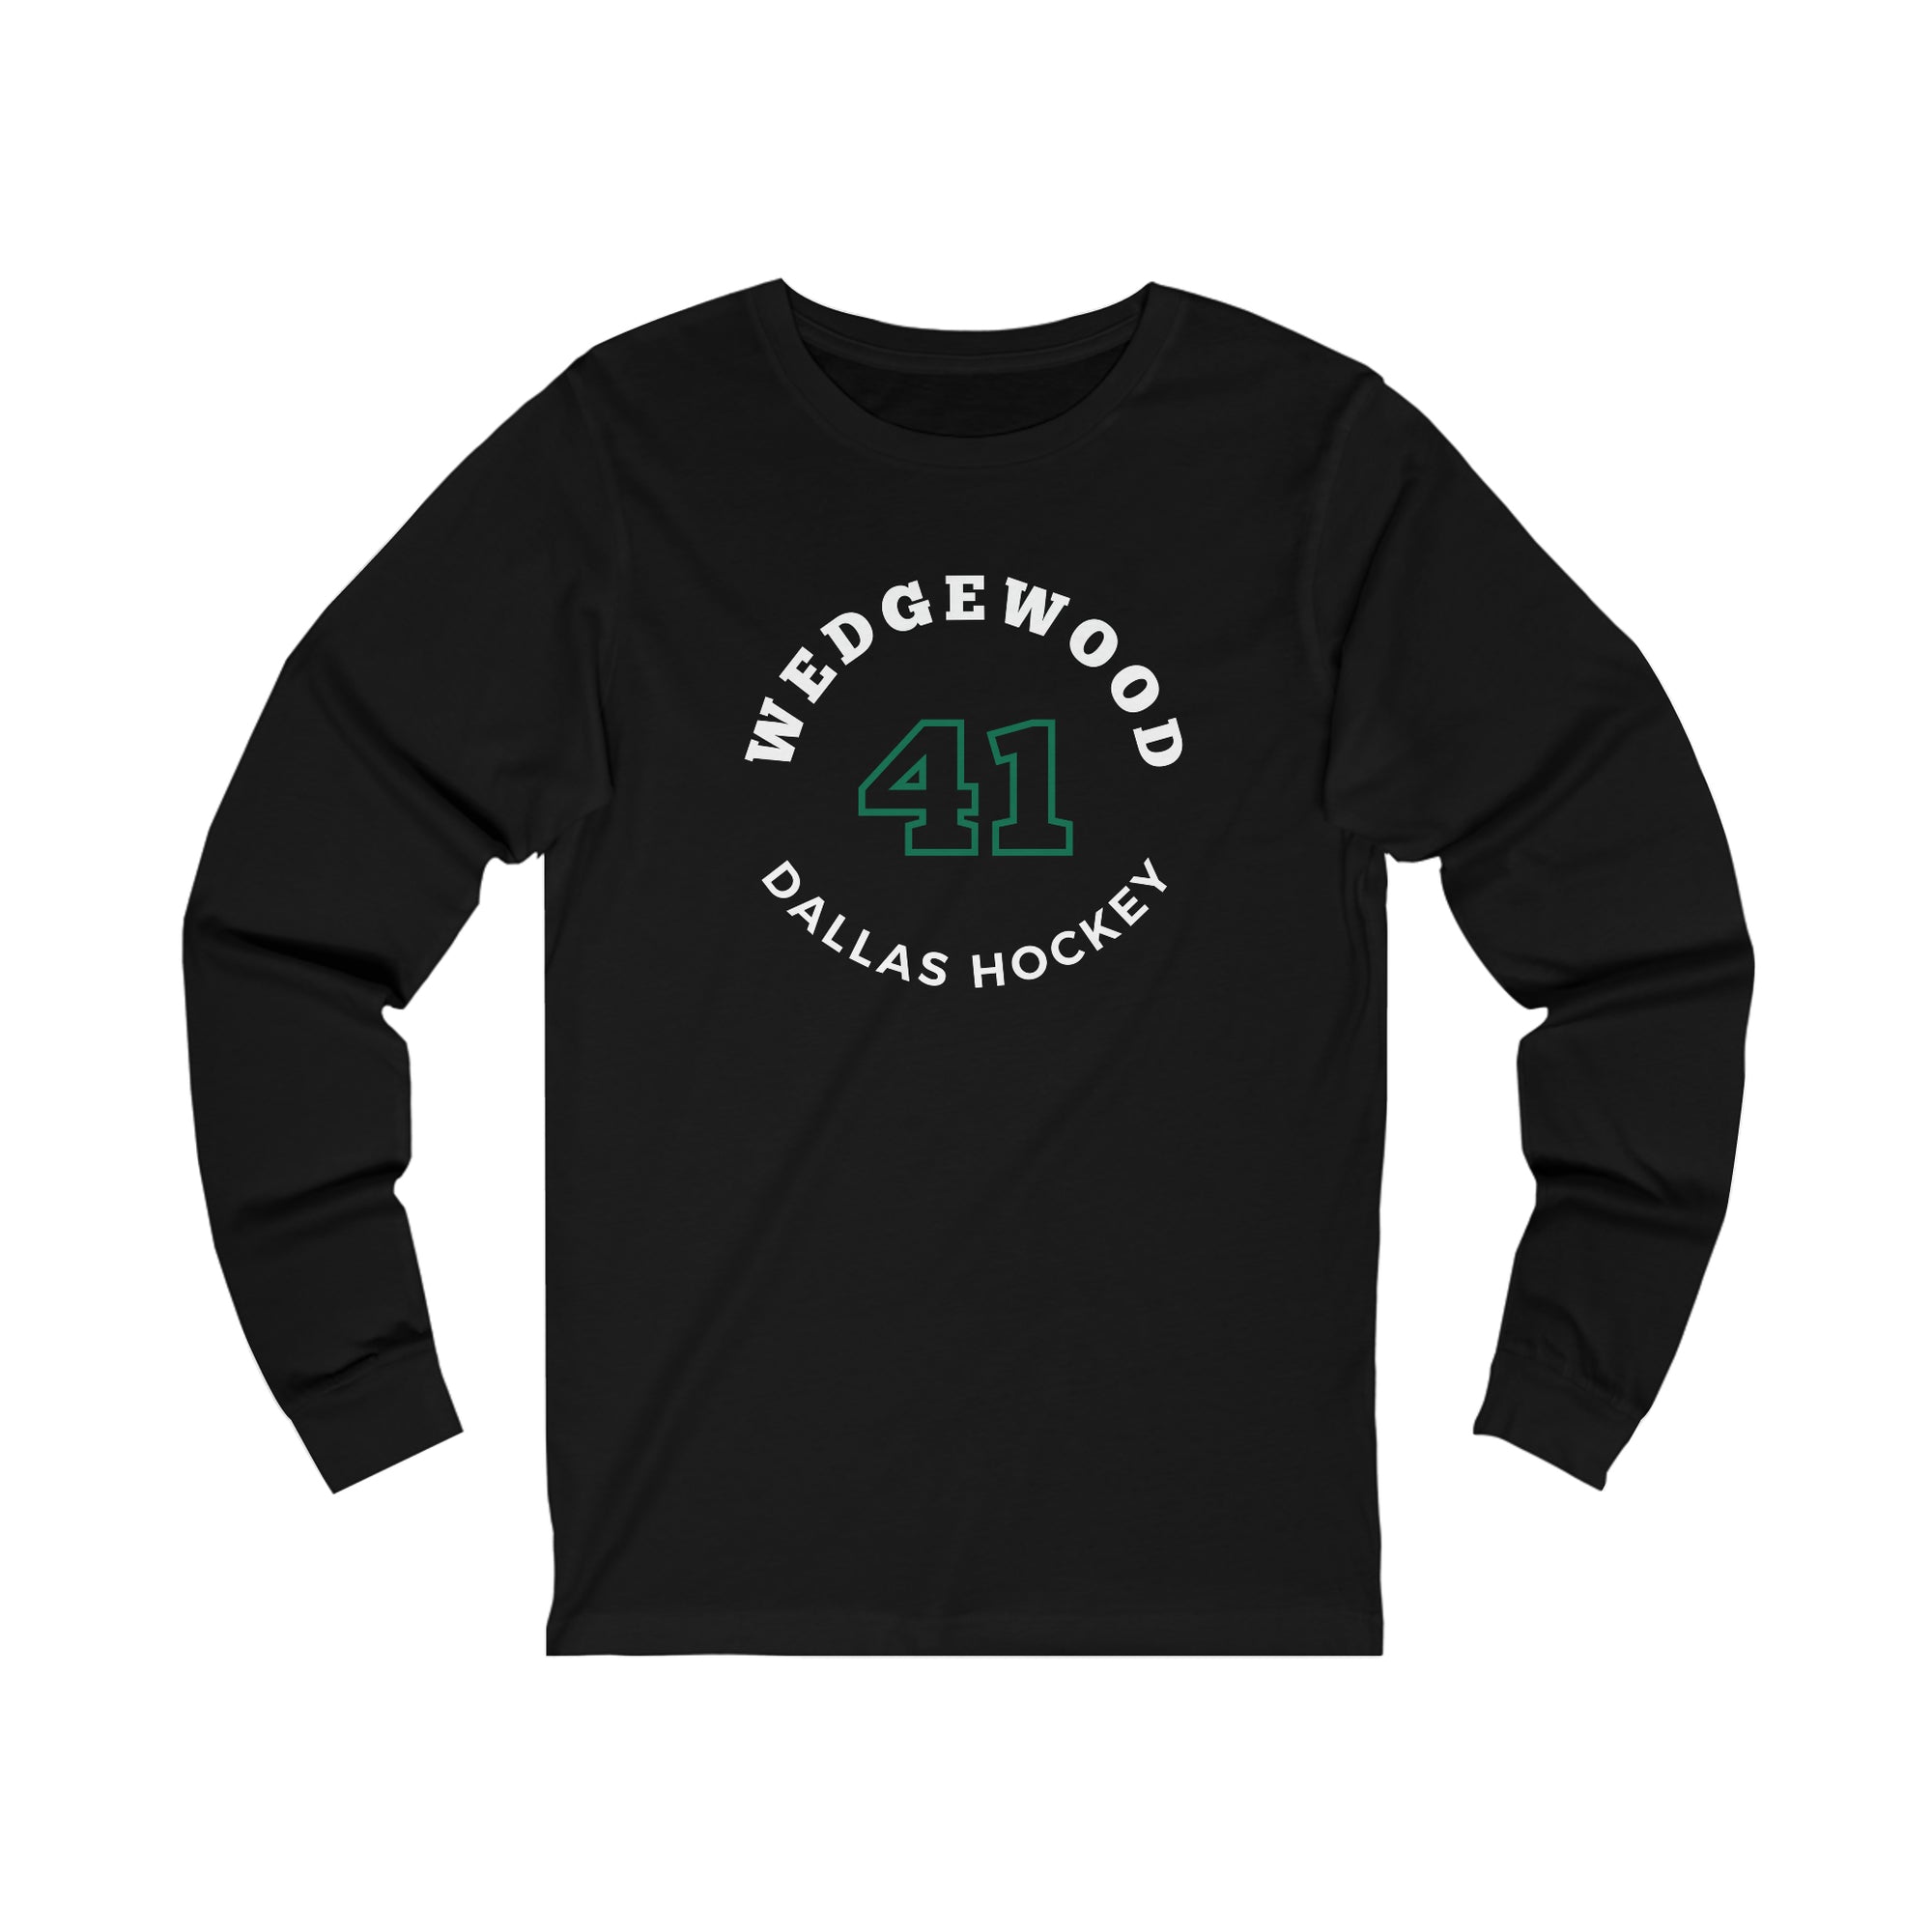 Wedgewood 41 Dallas Hockey Number Arch Design Unisex Jersey Long Sleeve Shirt